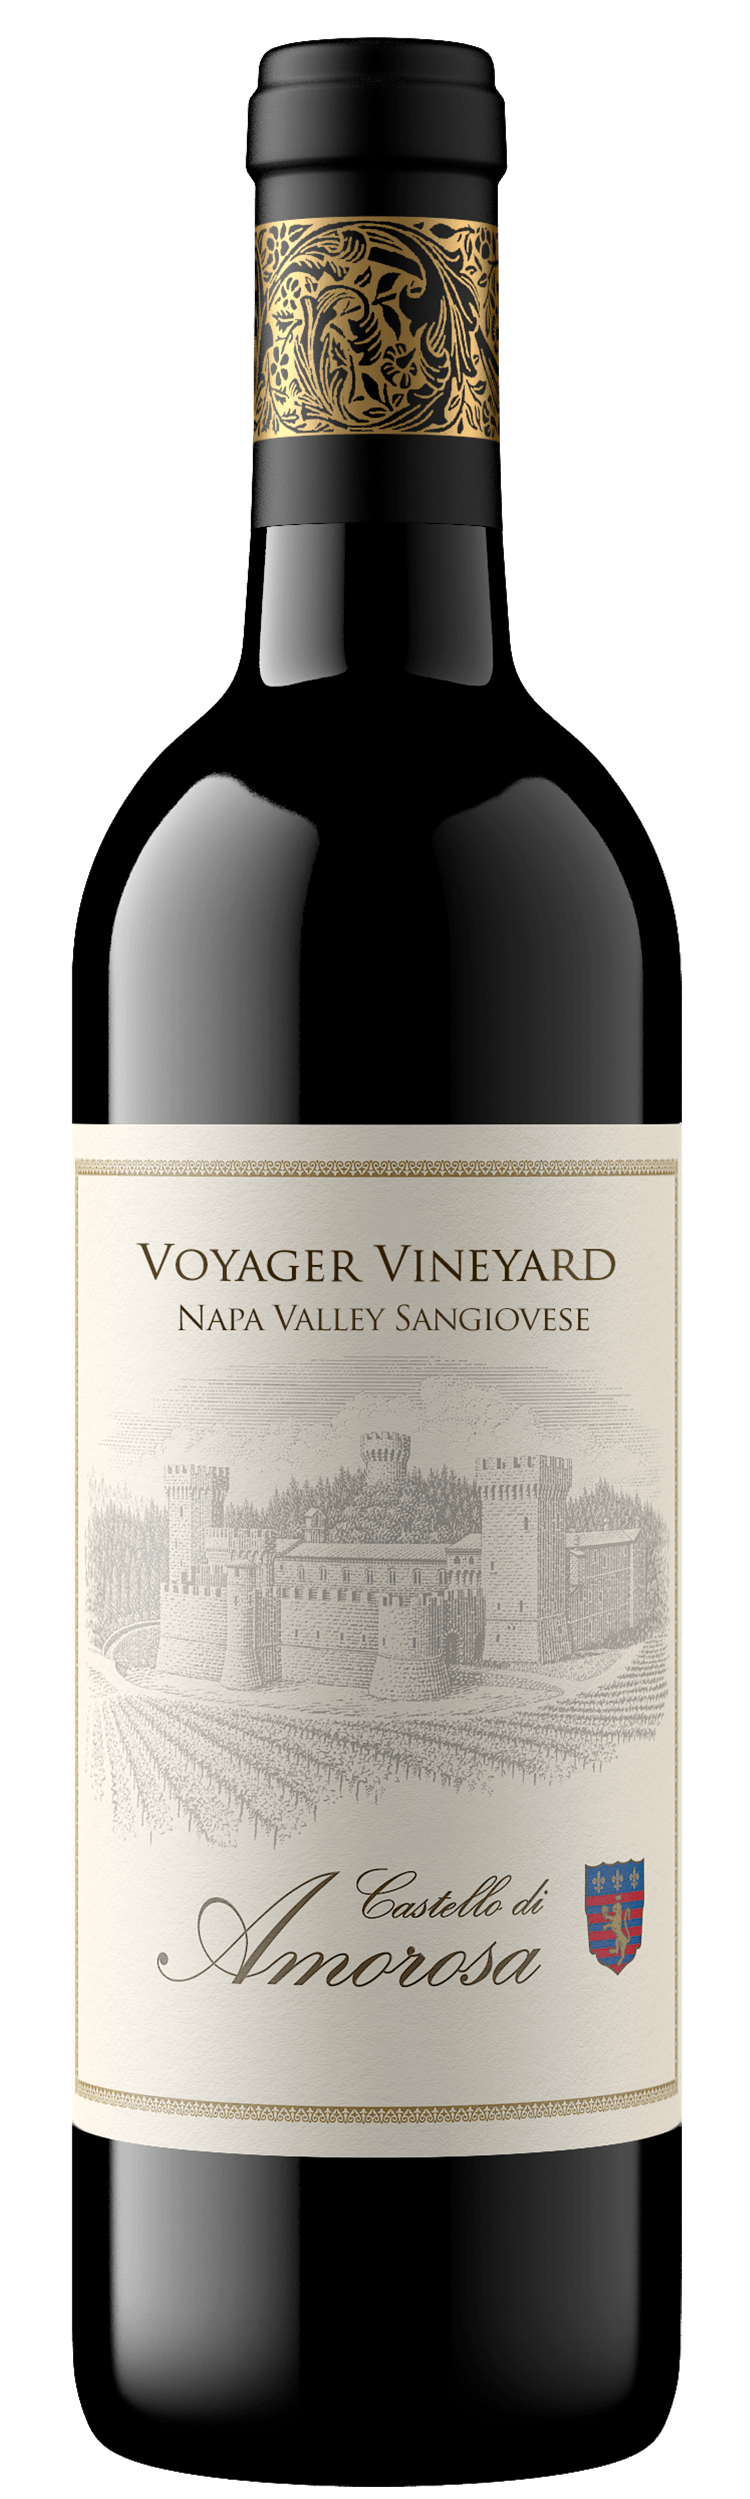 Voyager Vineyard Sangiovese